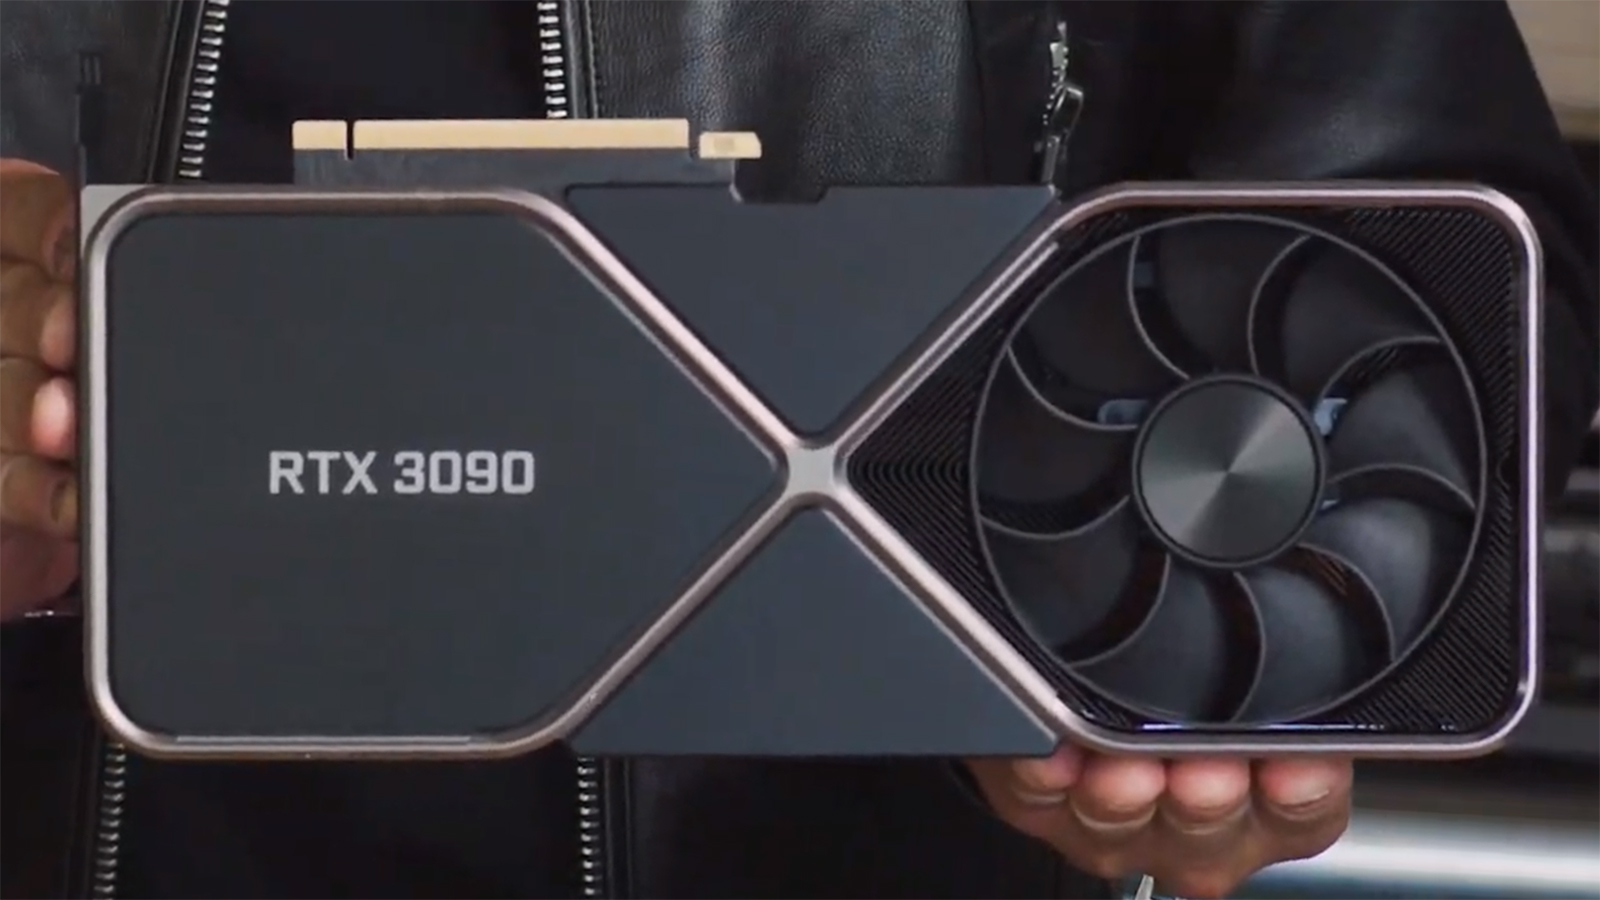 Nvidia RTX 3090 holdt i en hånd tæt på kamera